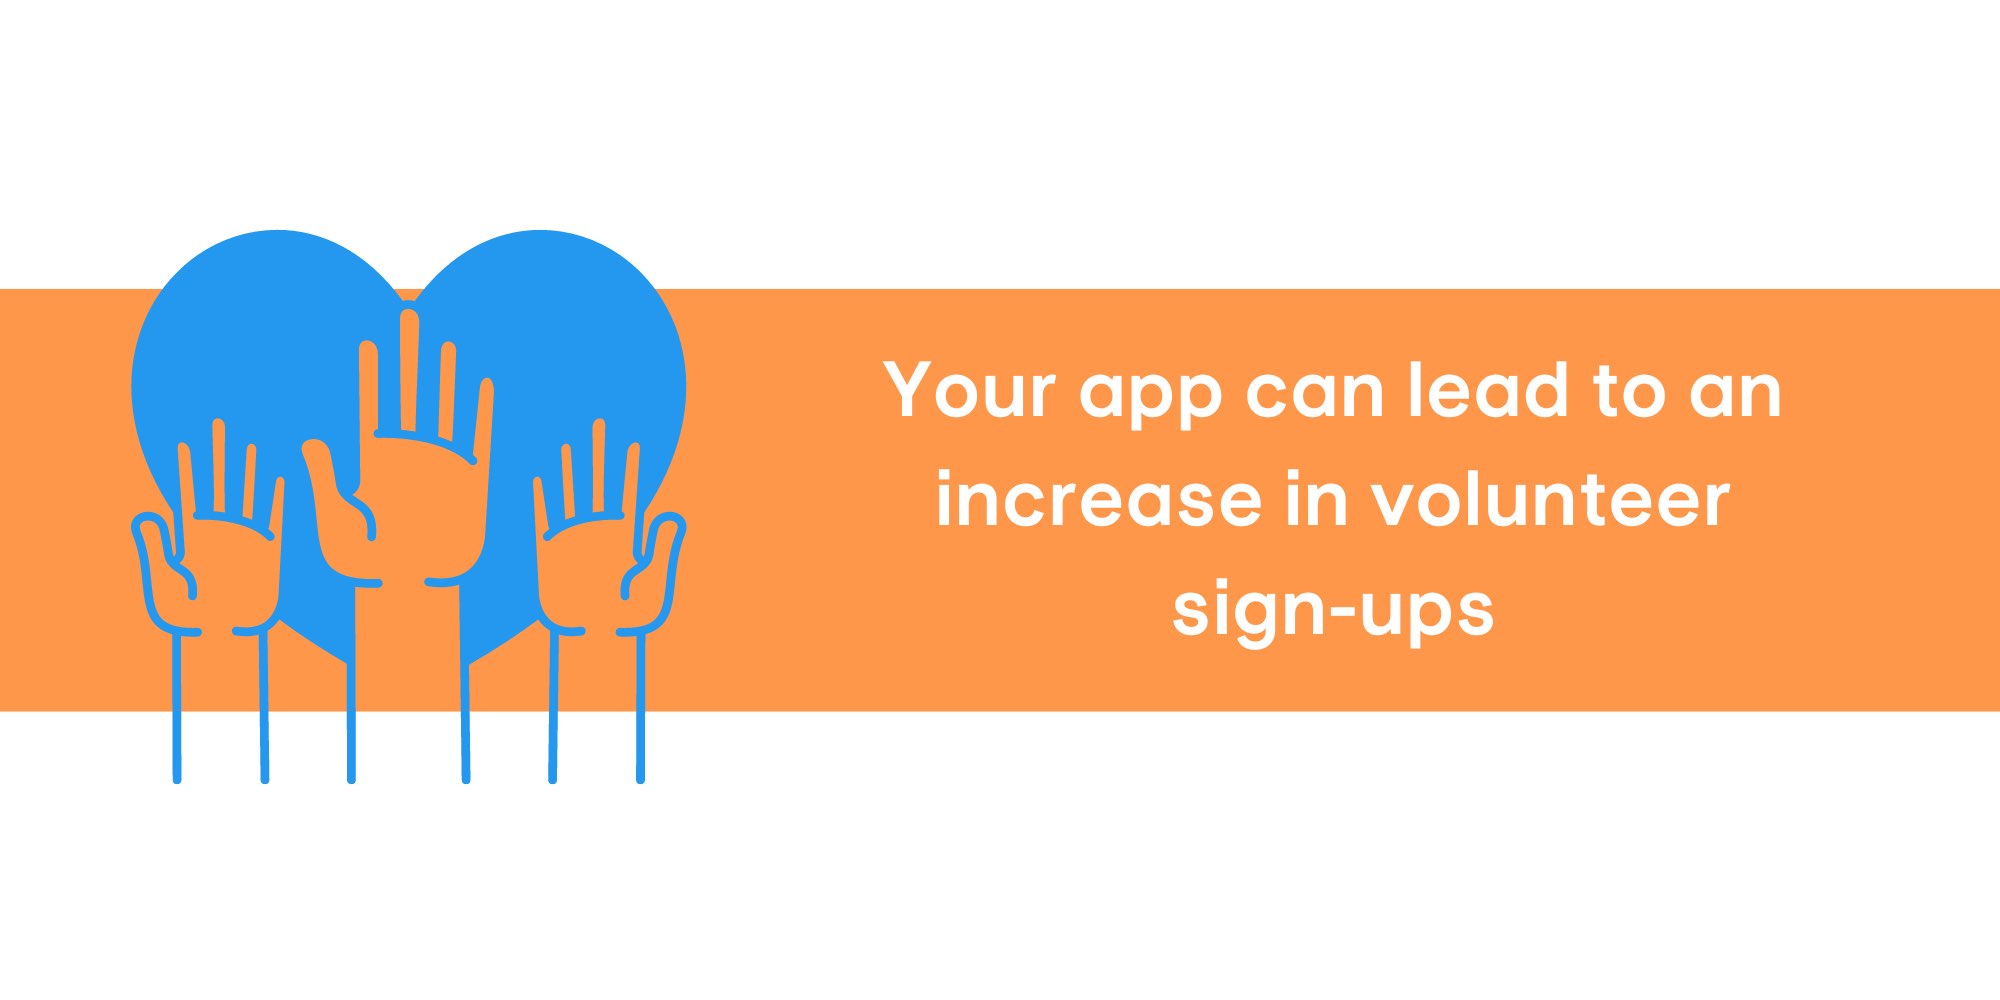 Your app can help increase volunteer signups